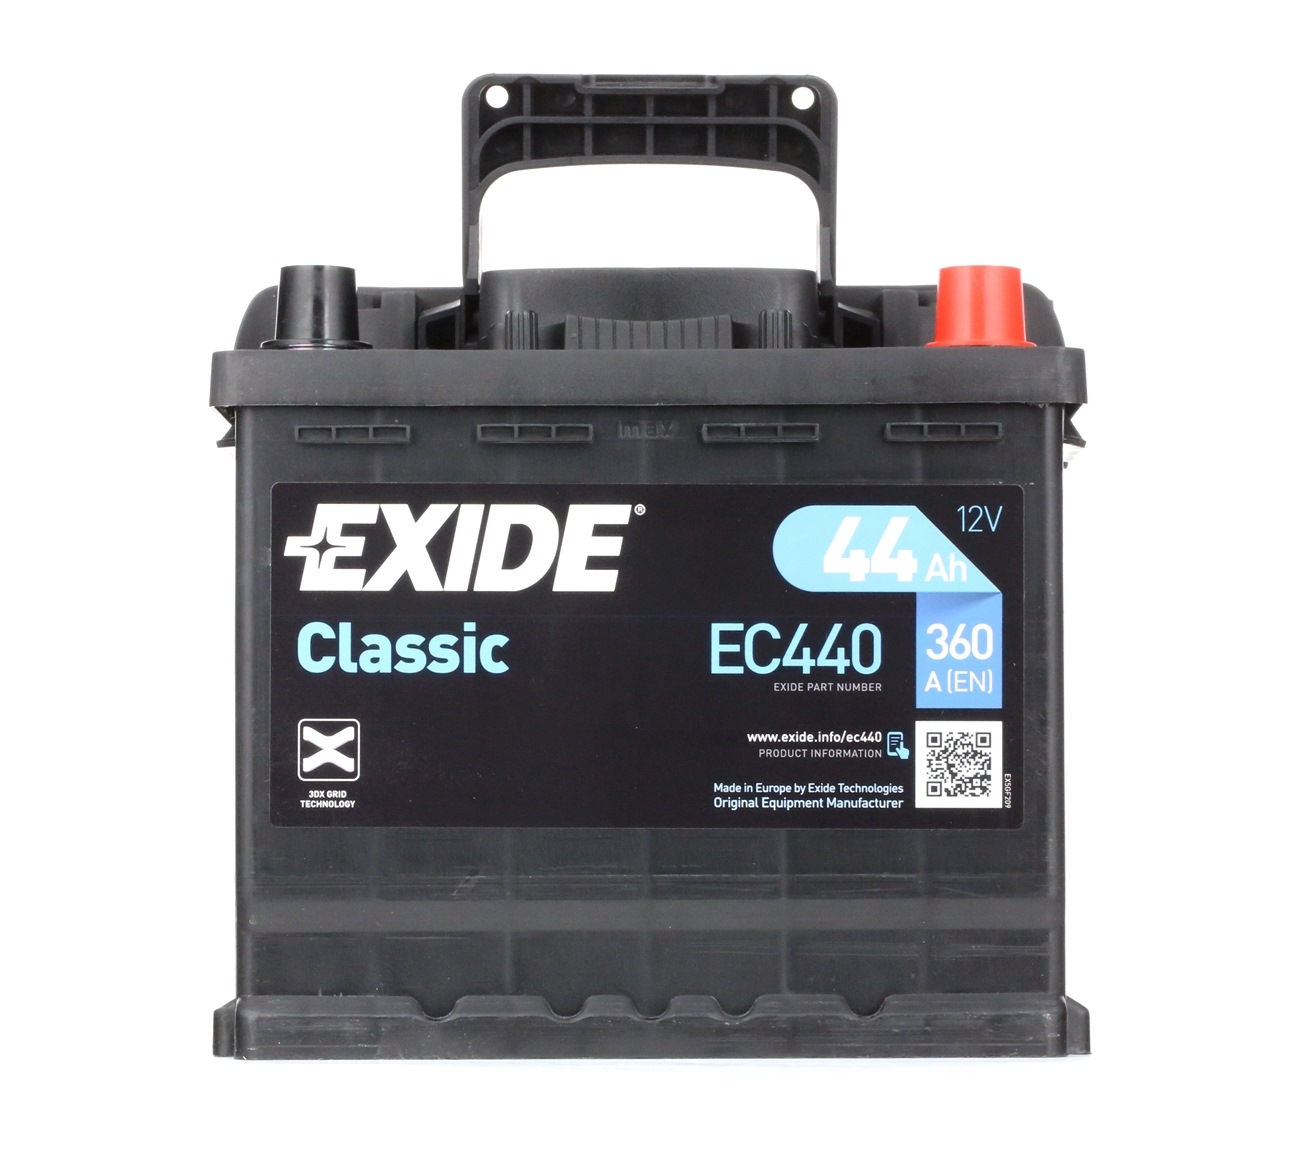 EC440 EXIDE Starterbatterie - im Internet bestellen